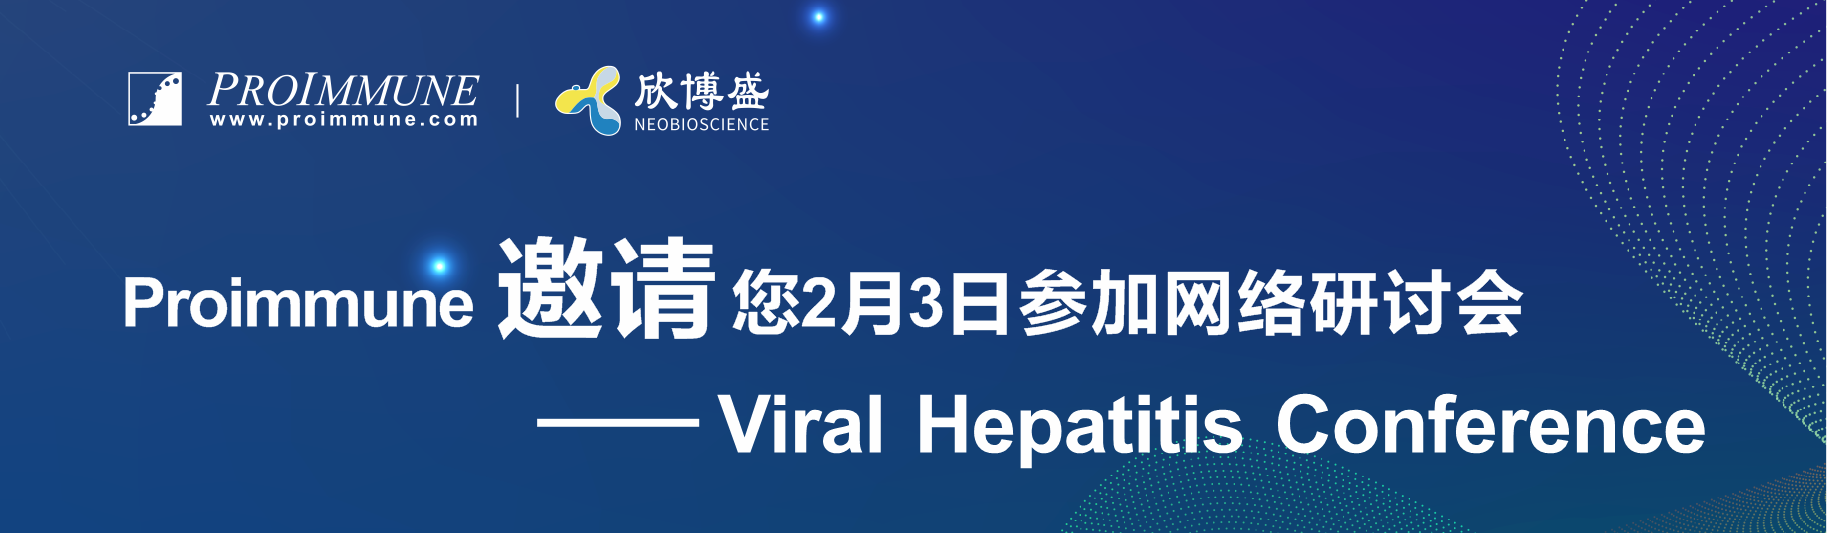 Proimmune邀请您2月3日参加网络研讨会—Viral Hepatitis Conference